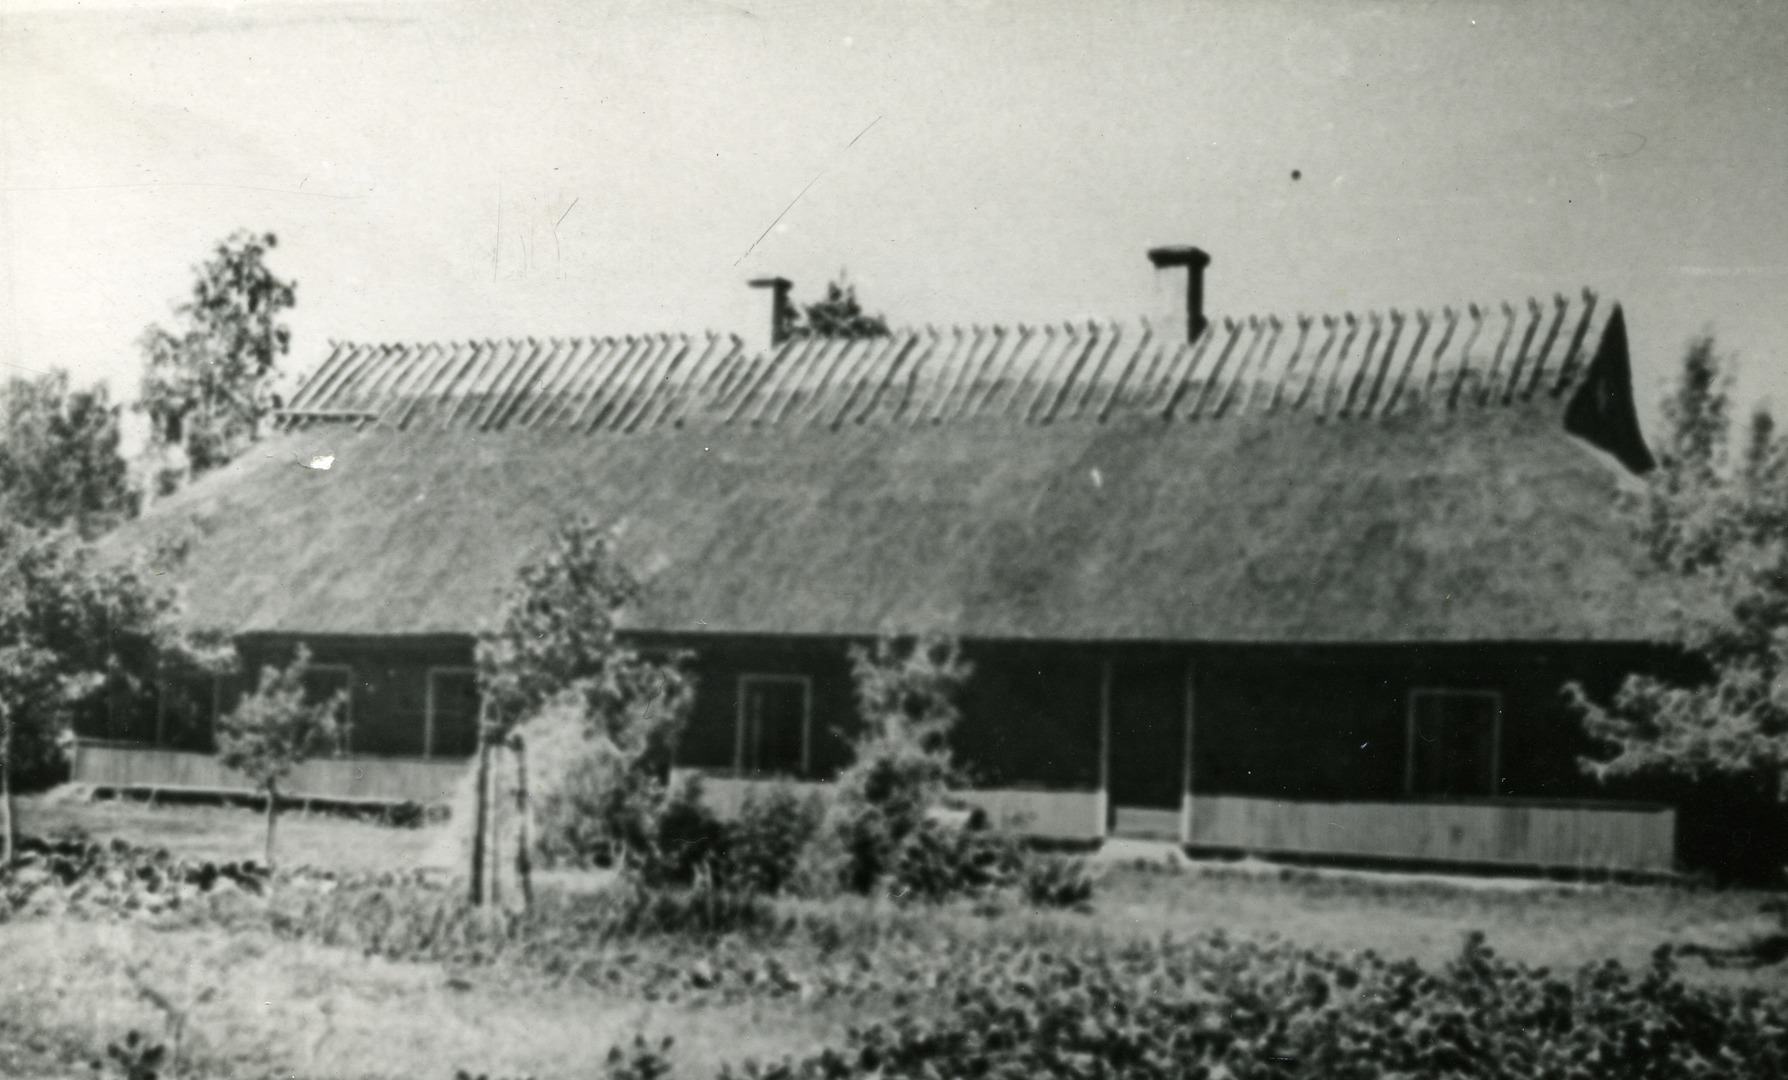 Lõetsa School House